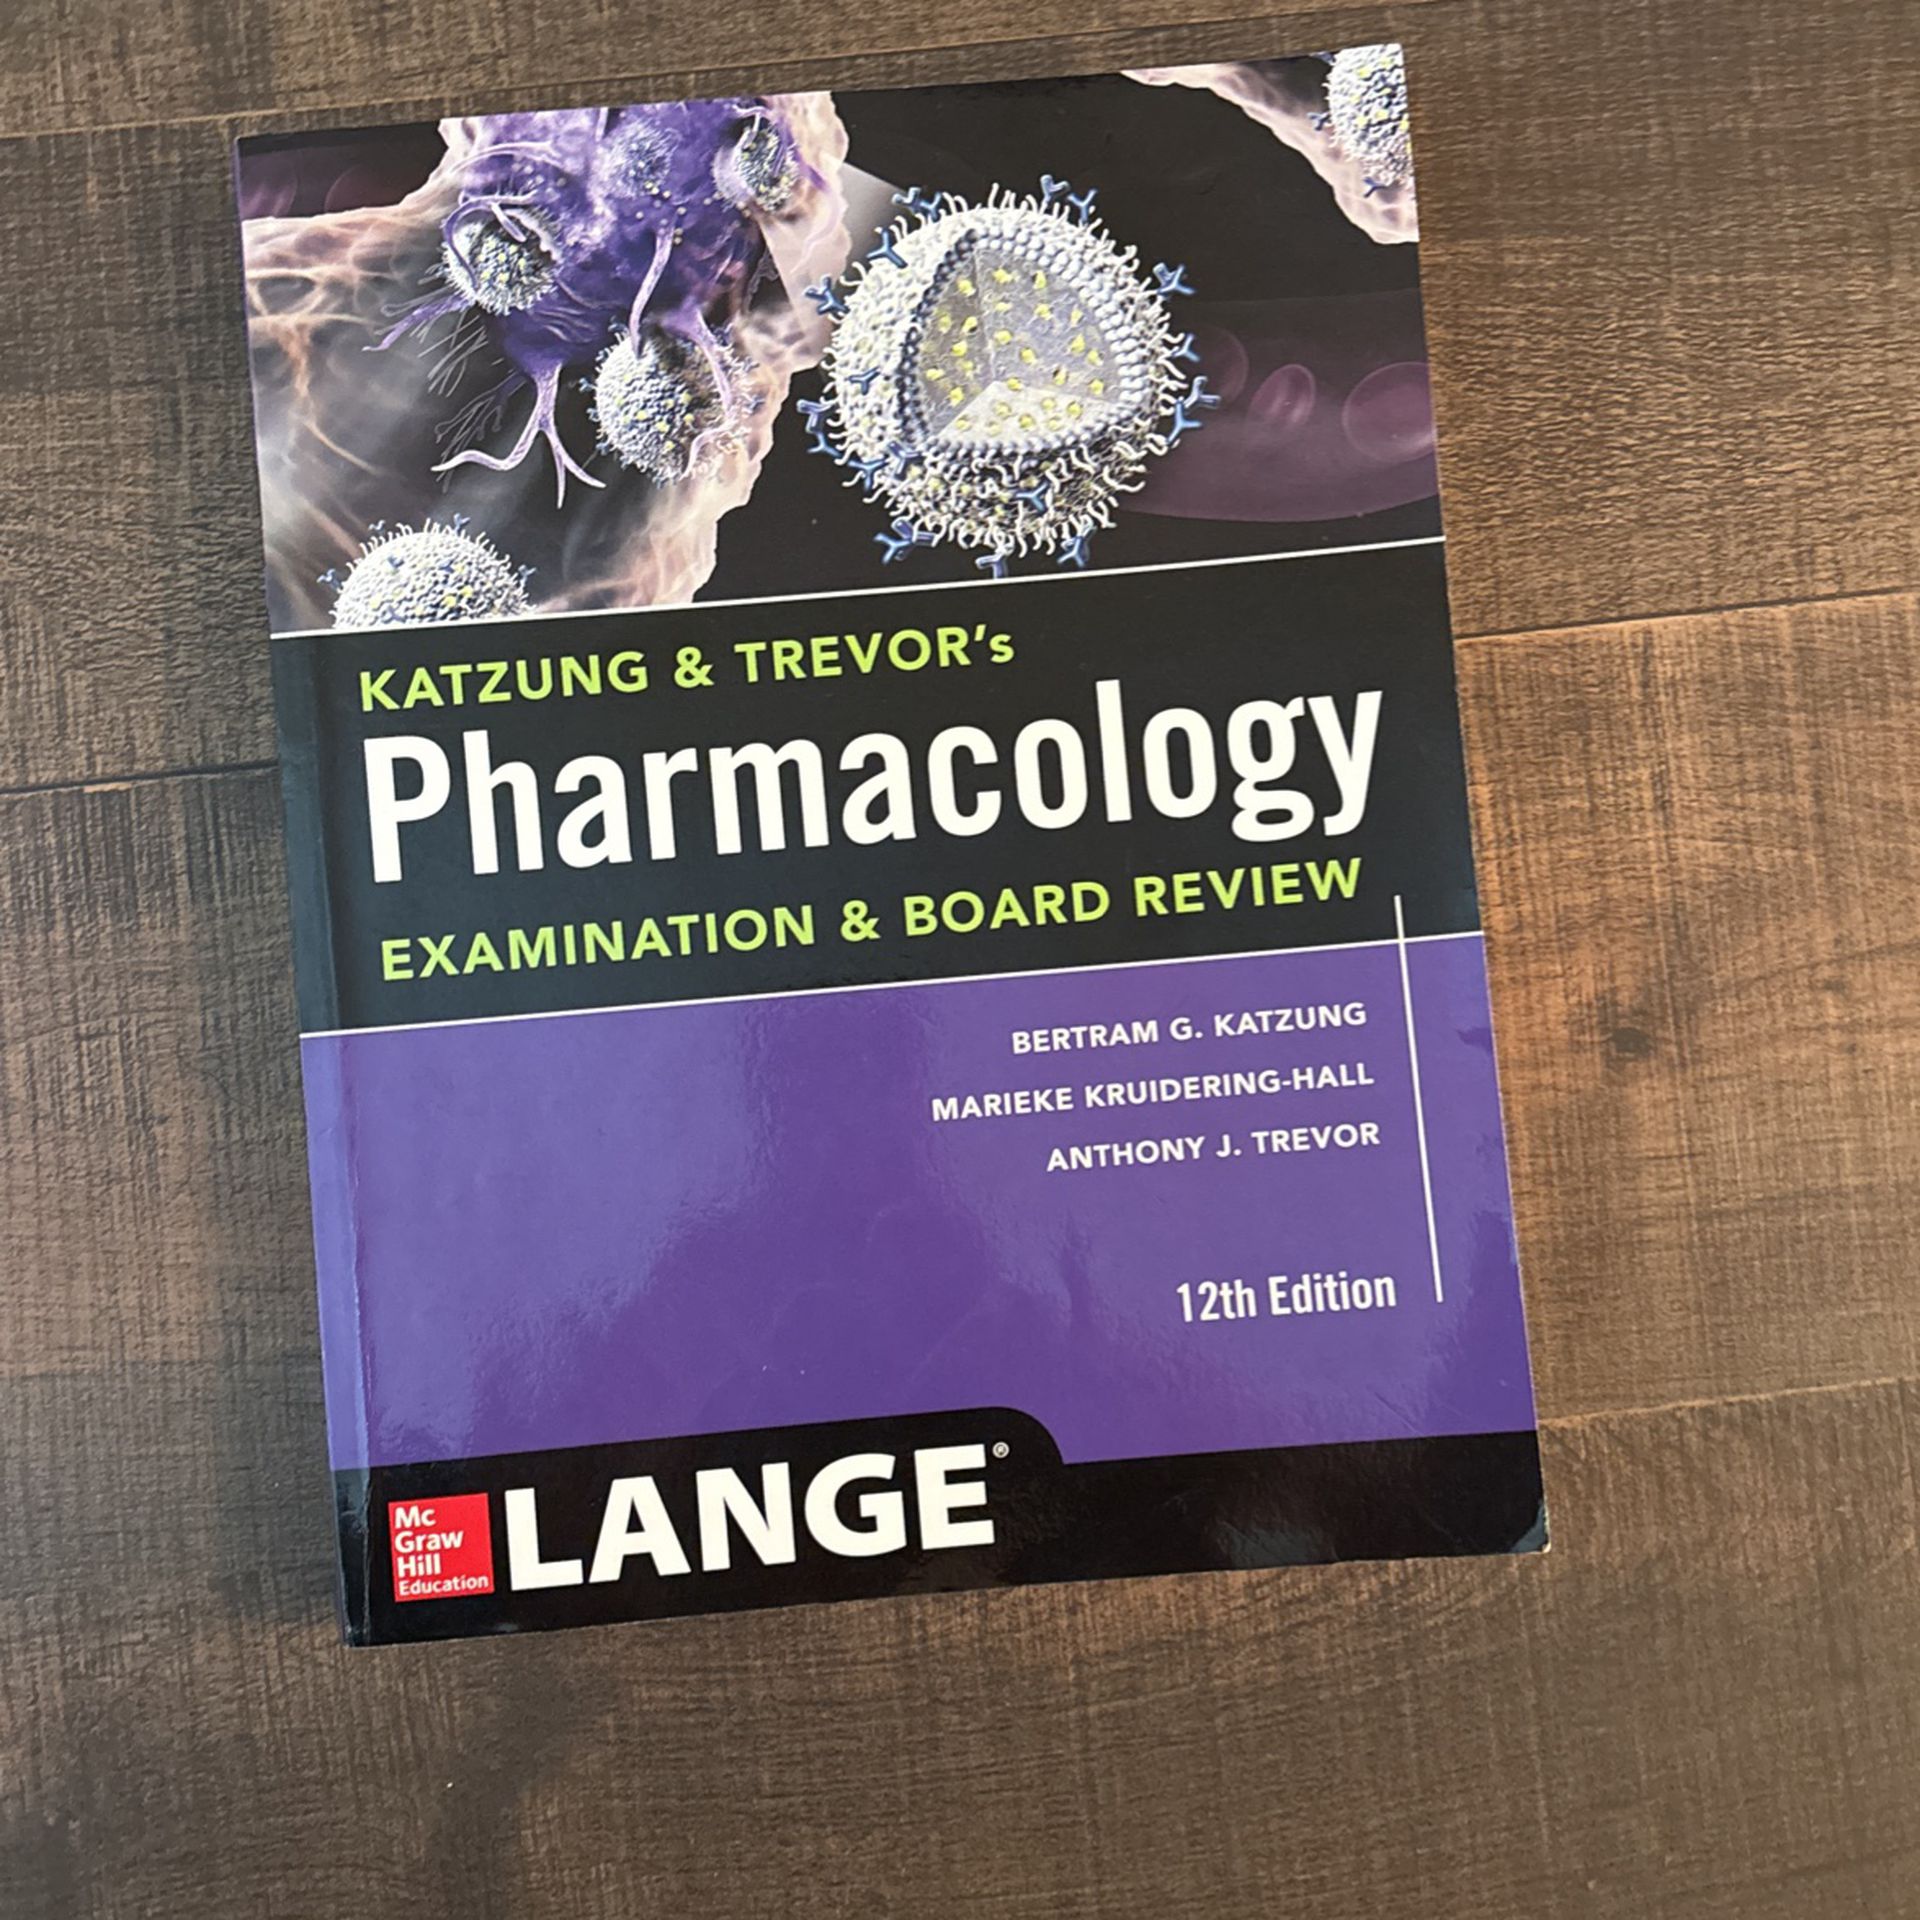 Katzung and Trevor’s Pharmacology short book